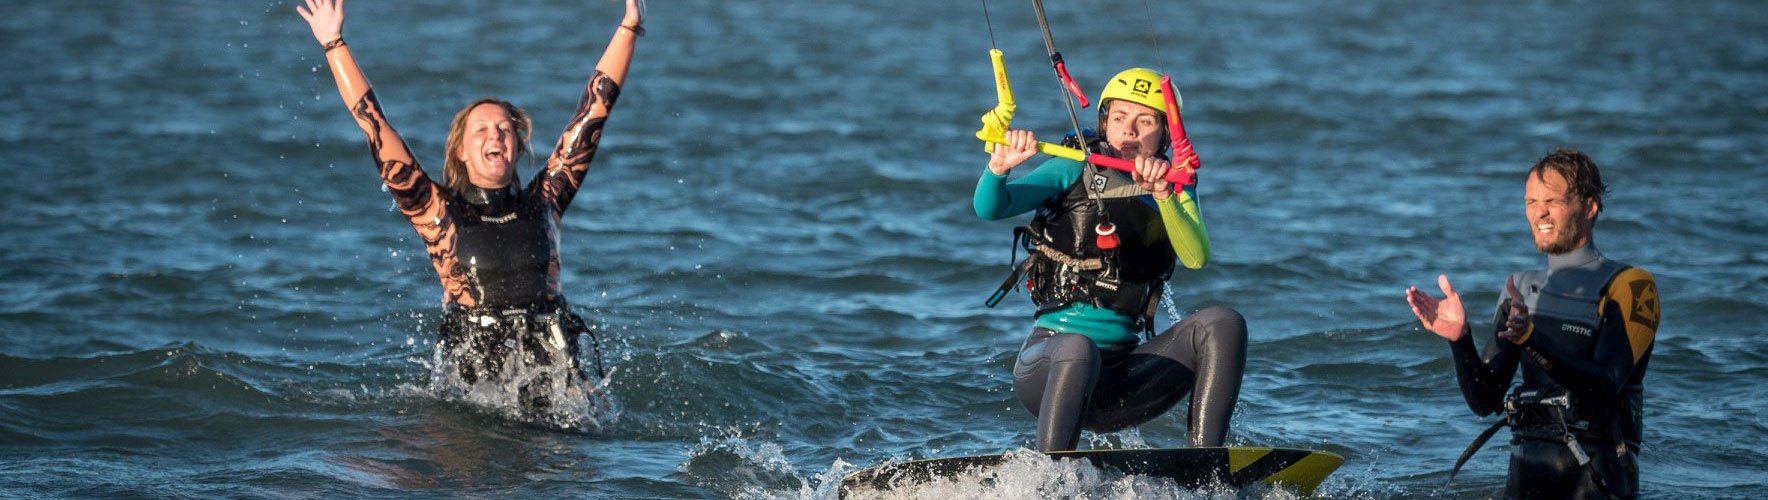 Kitesurfing Lessons Dublin and Achill